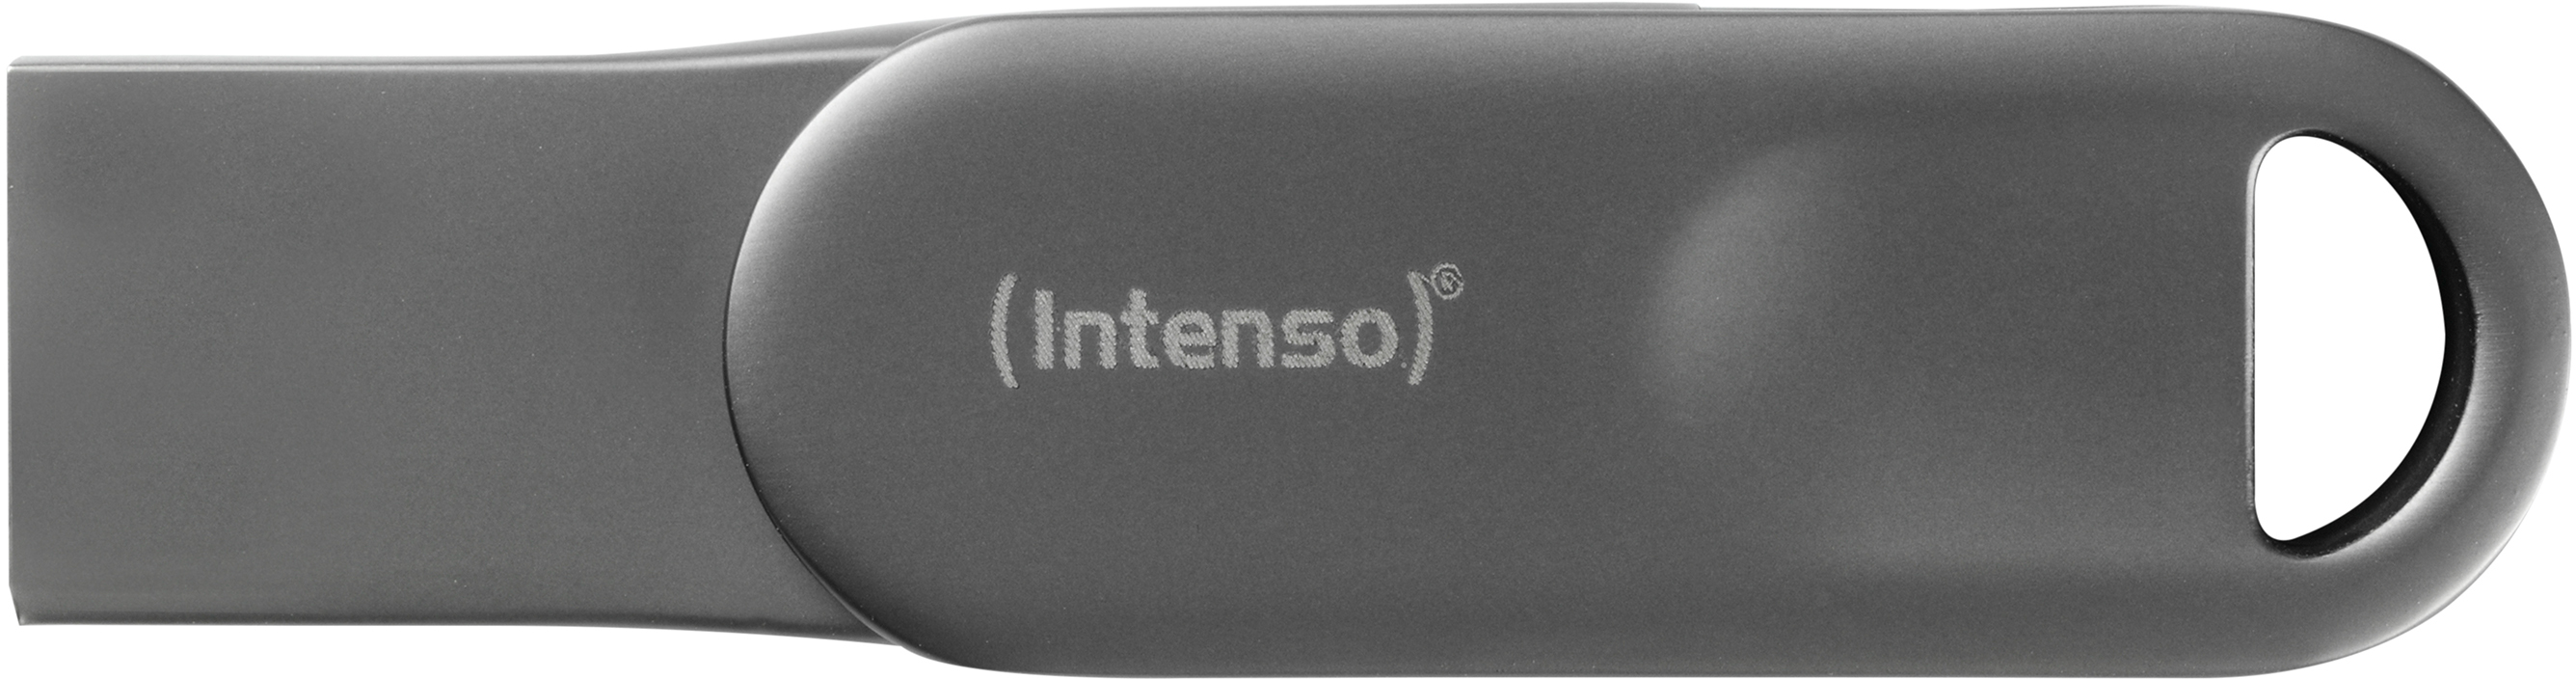 INTENSO IMOBILE LINE PRO mit Anthrazit GB, 64 MB/s, USB-Stick, Lightning 70 Connector Apple